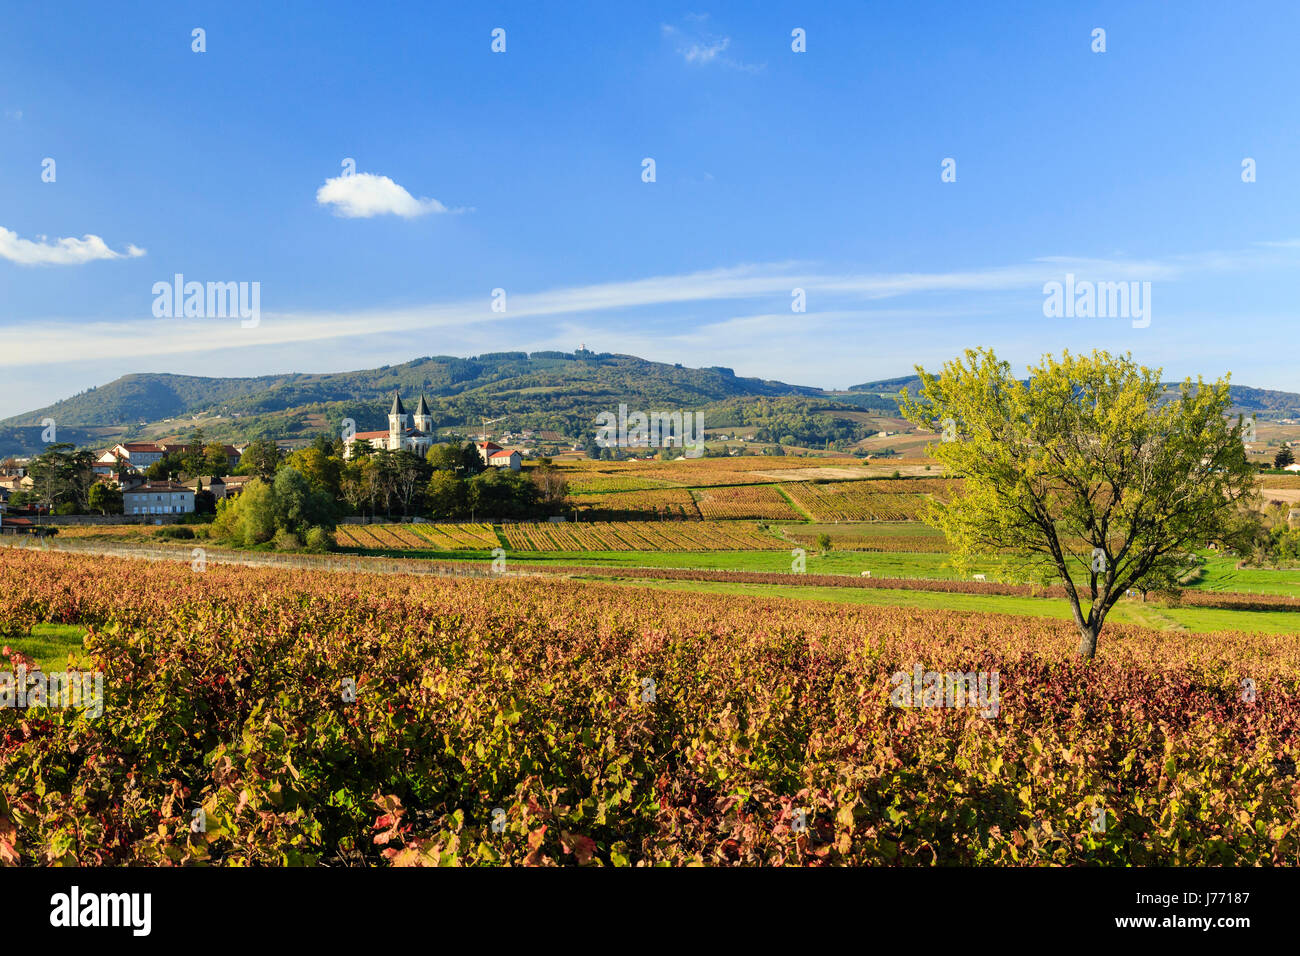 France, Rhone, Beaujolais region, Régnie Durette, the village and the vineyards in autumn Stock Photo